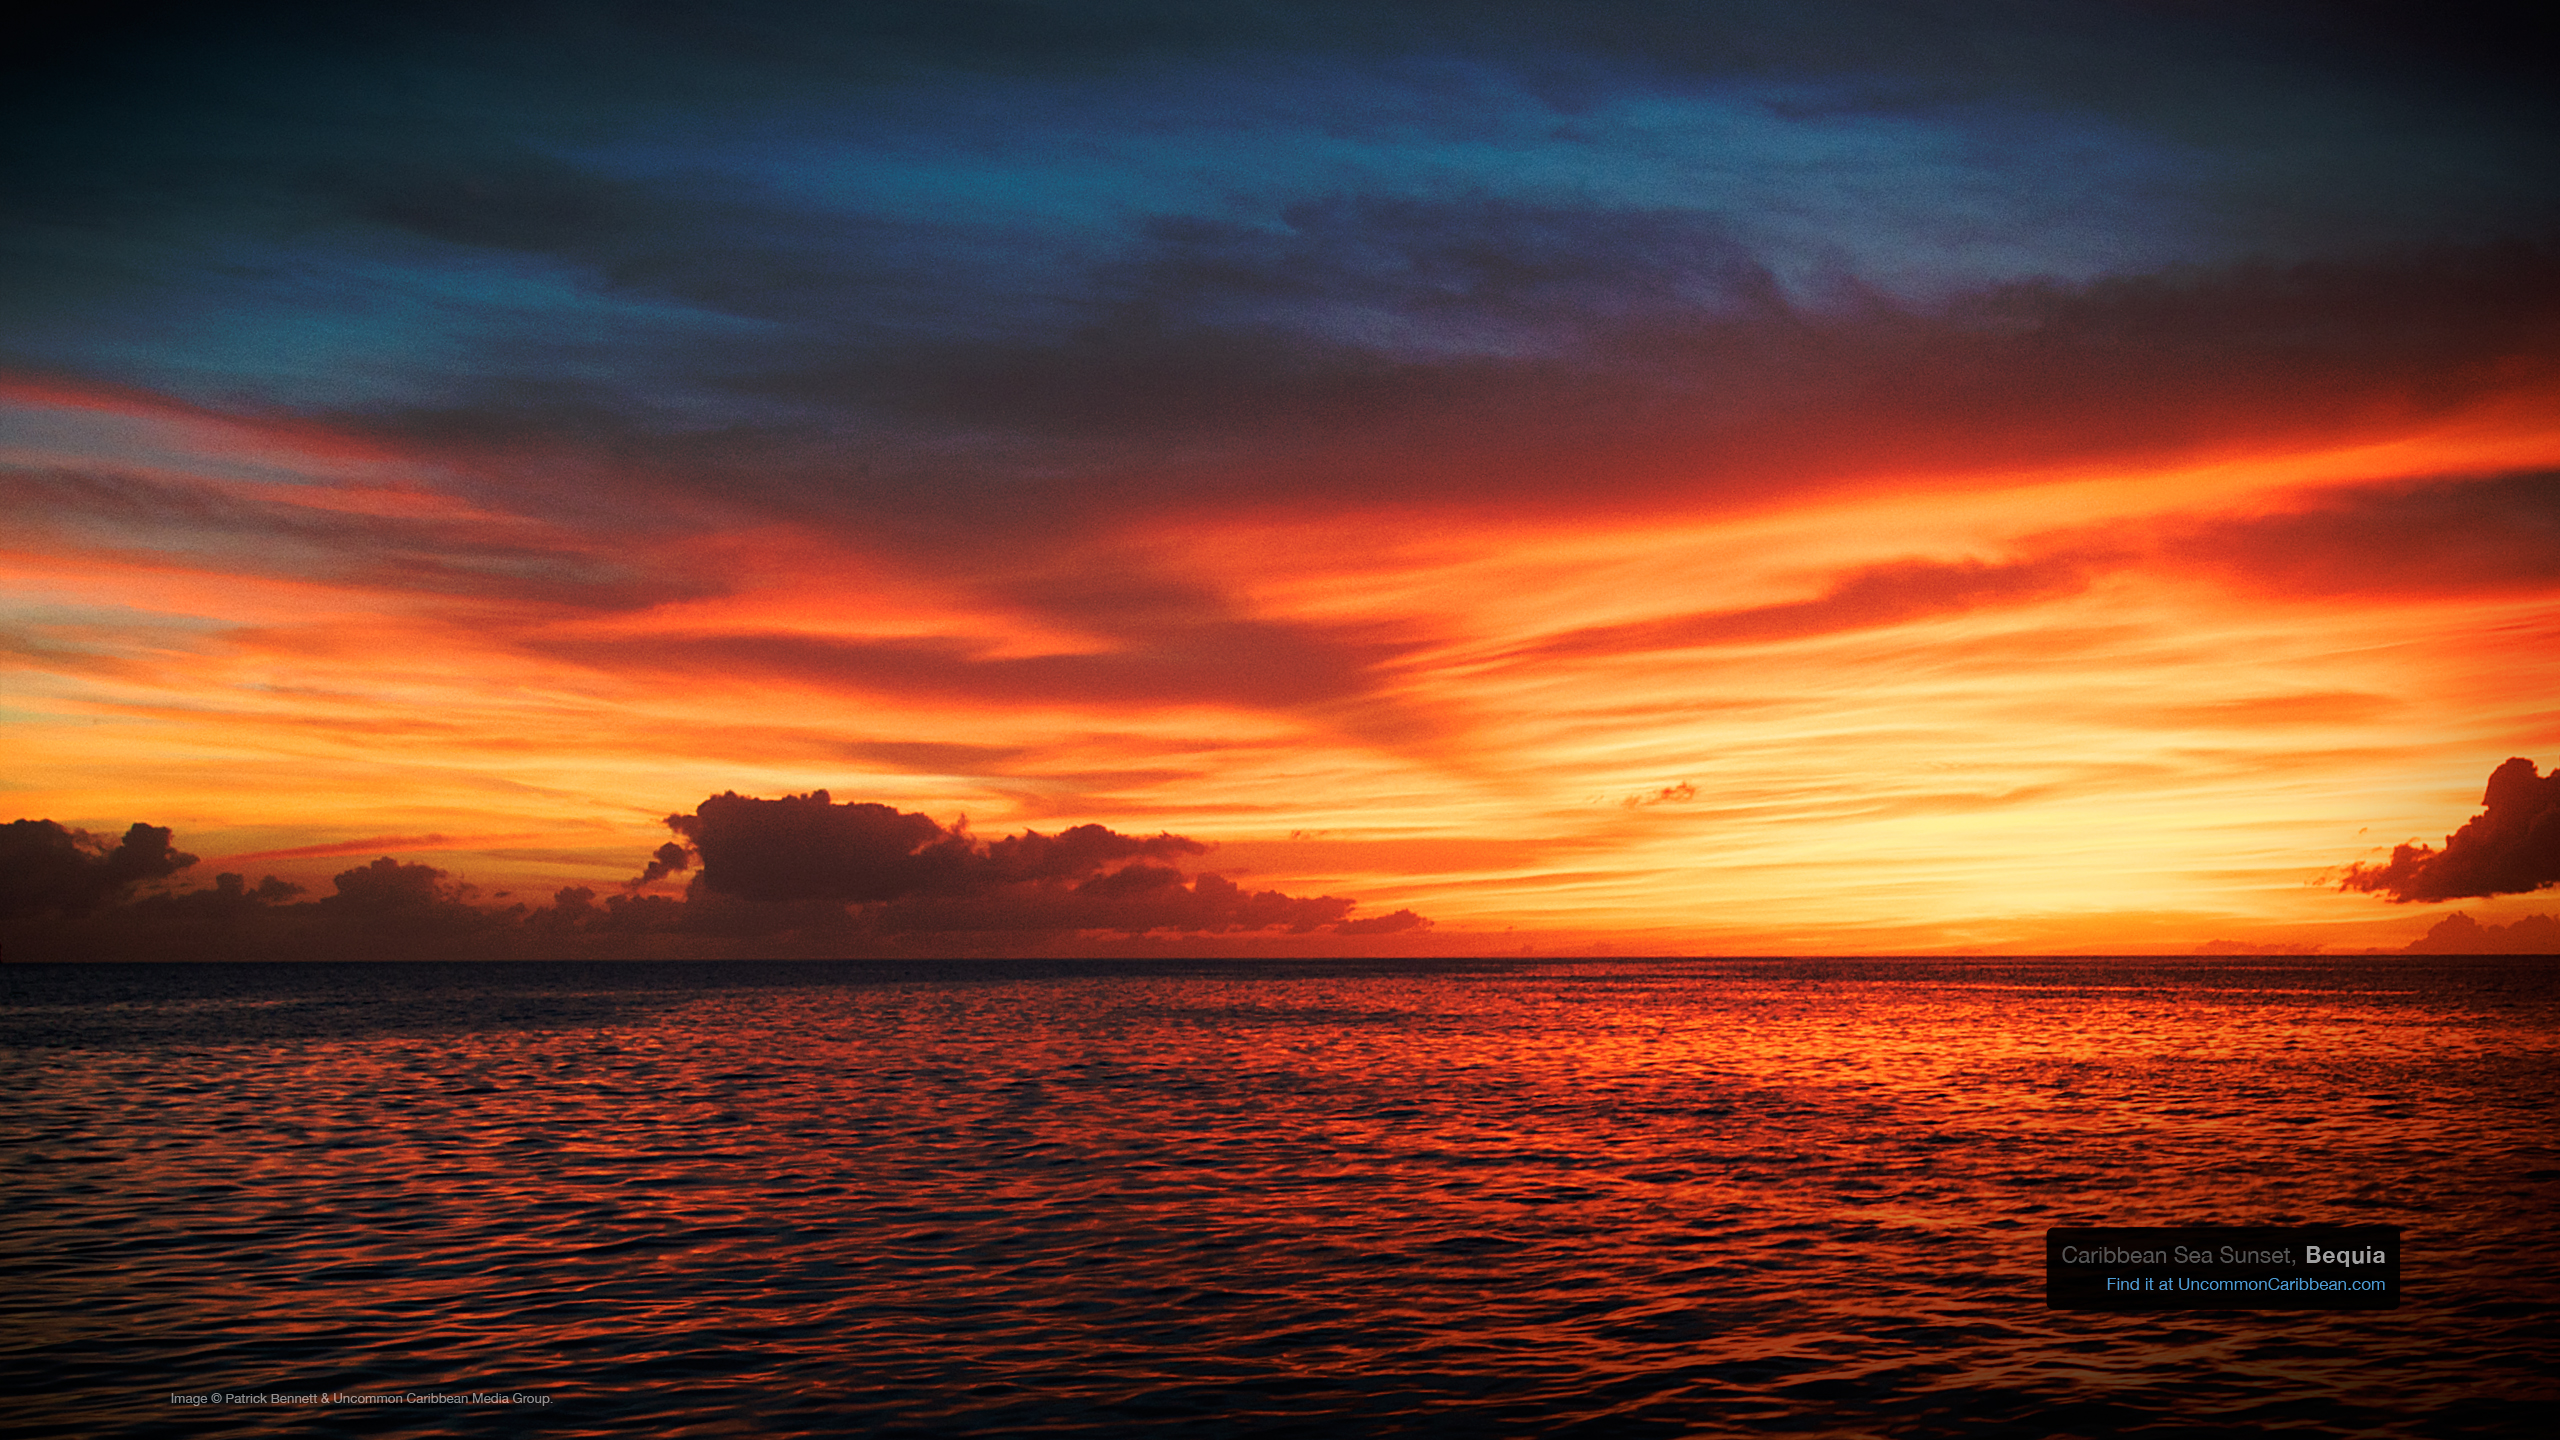 Caribbean Sea Sunset, Bequia